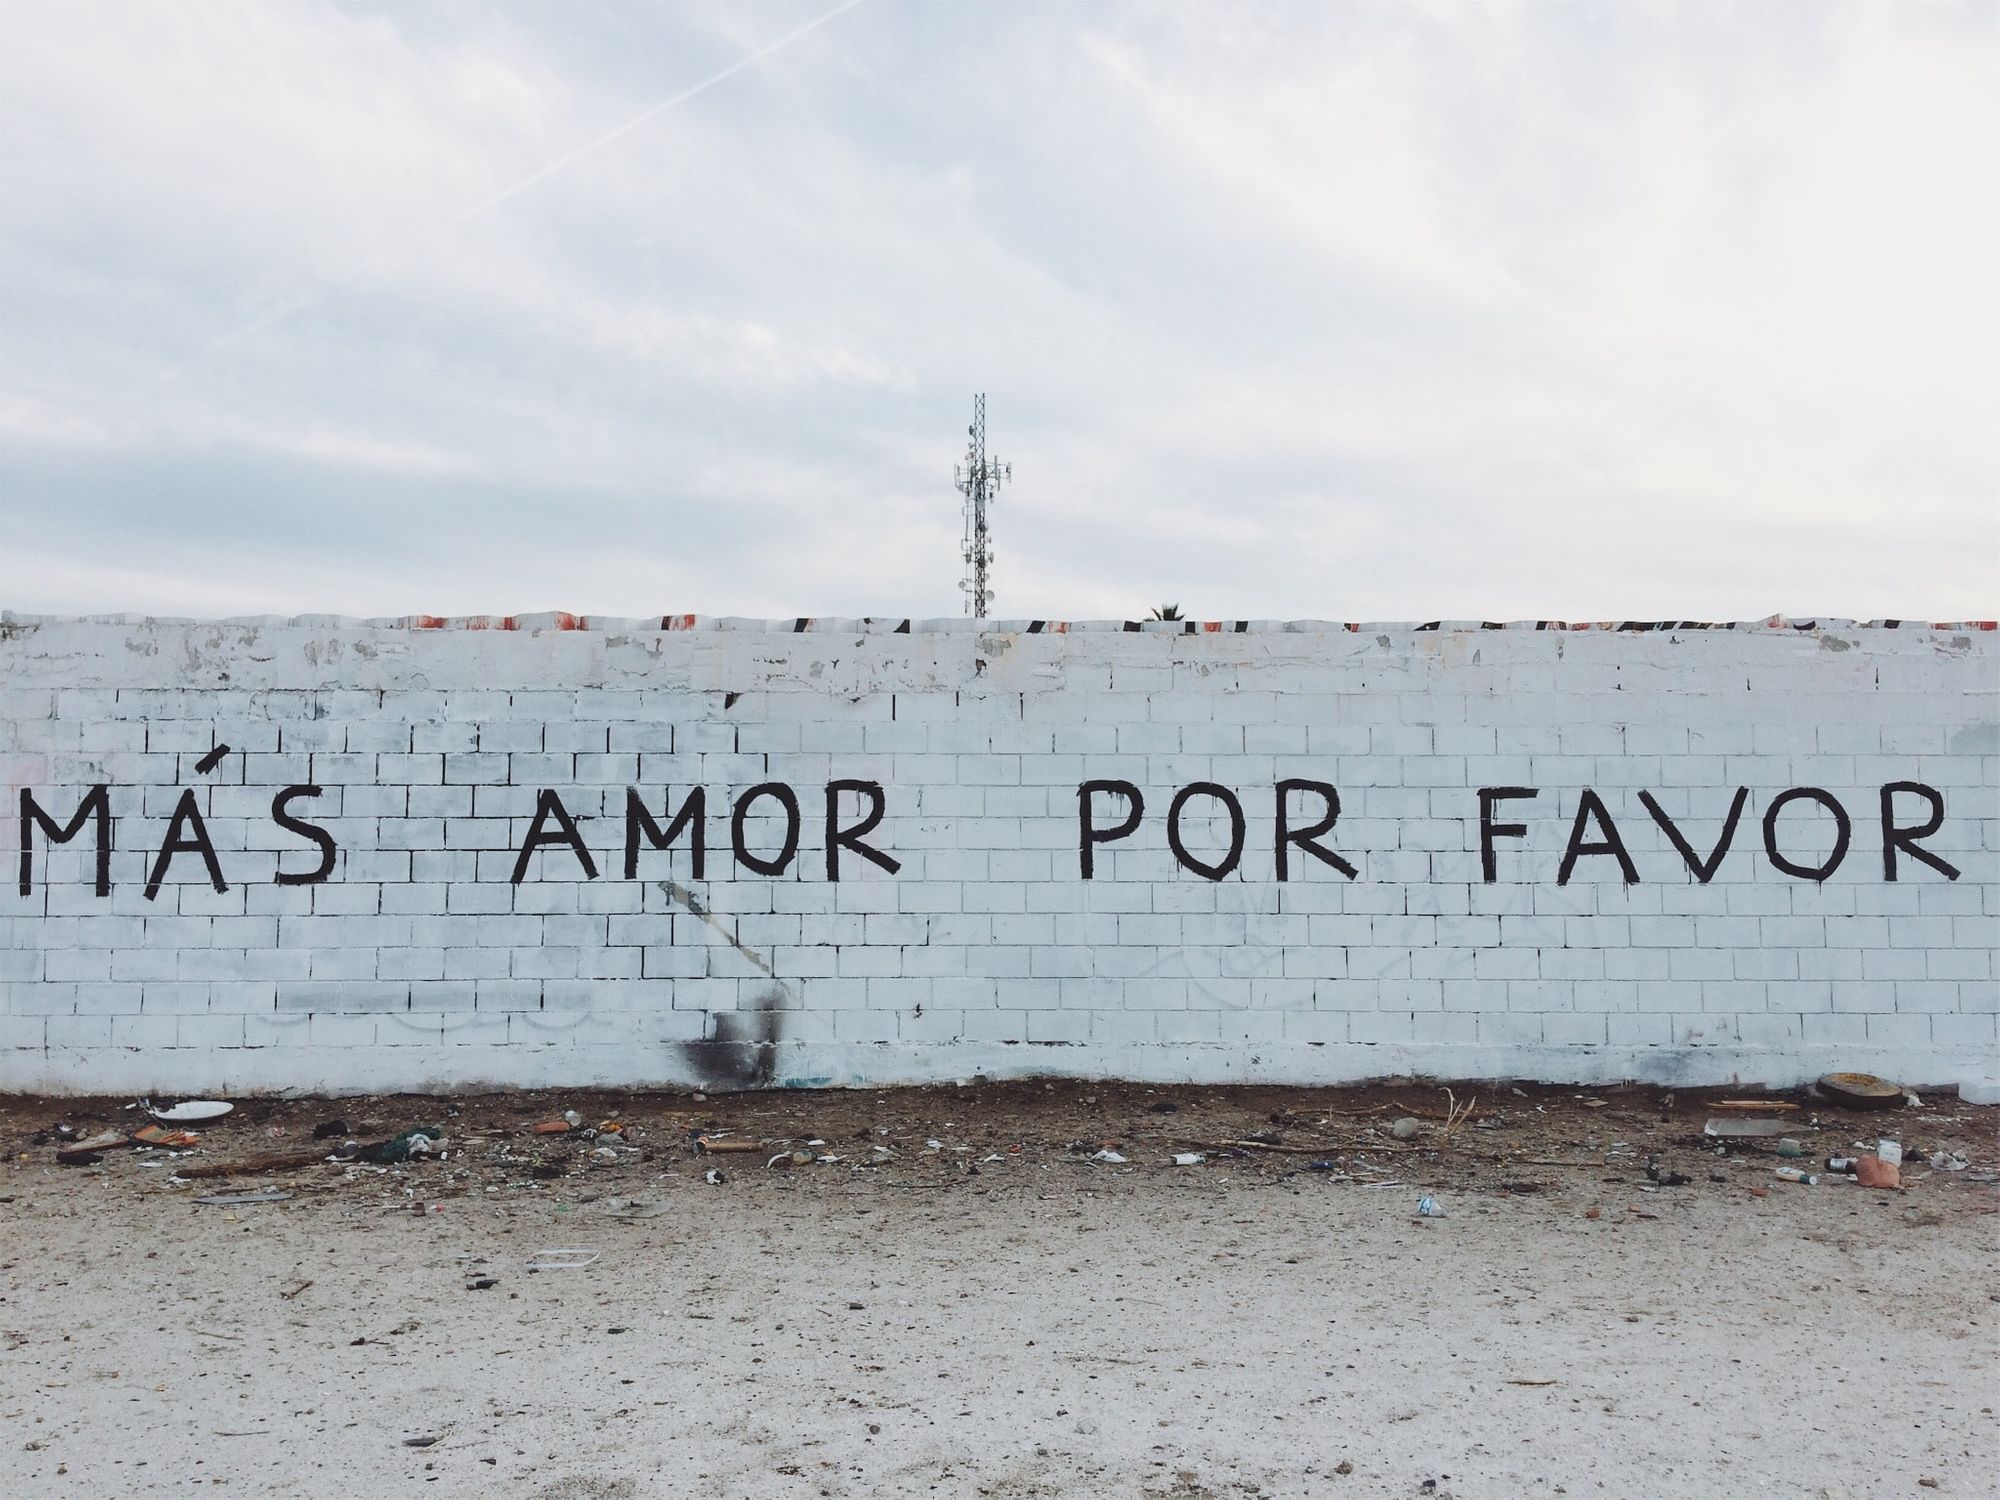 Spanish vs English: Graffiti that says Mas Amor Por Favor